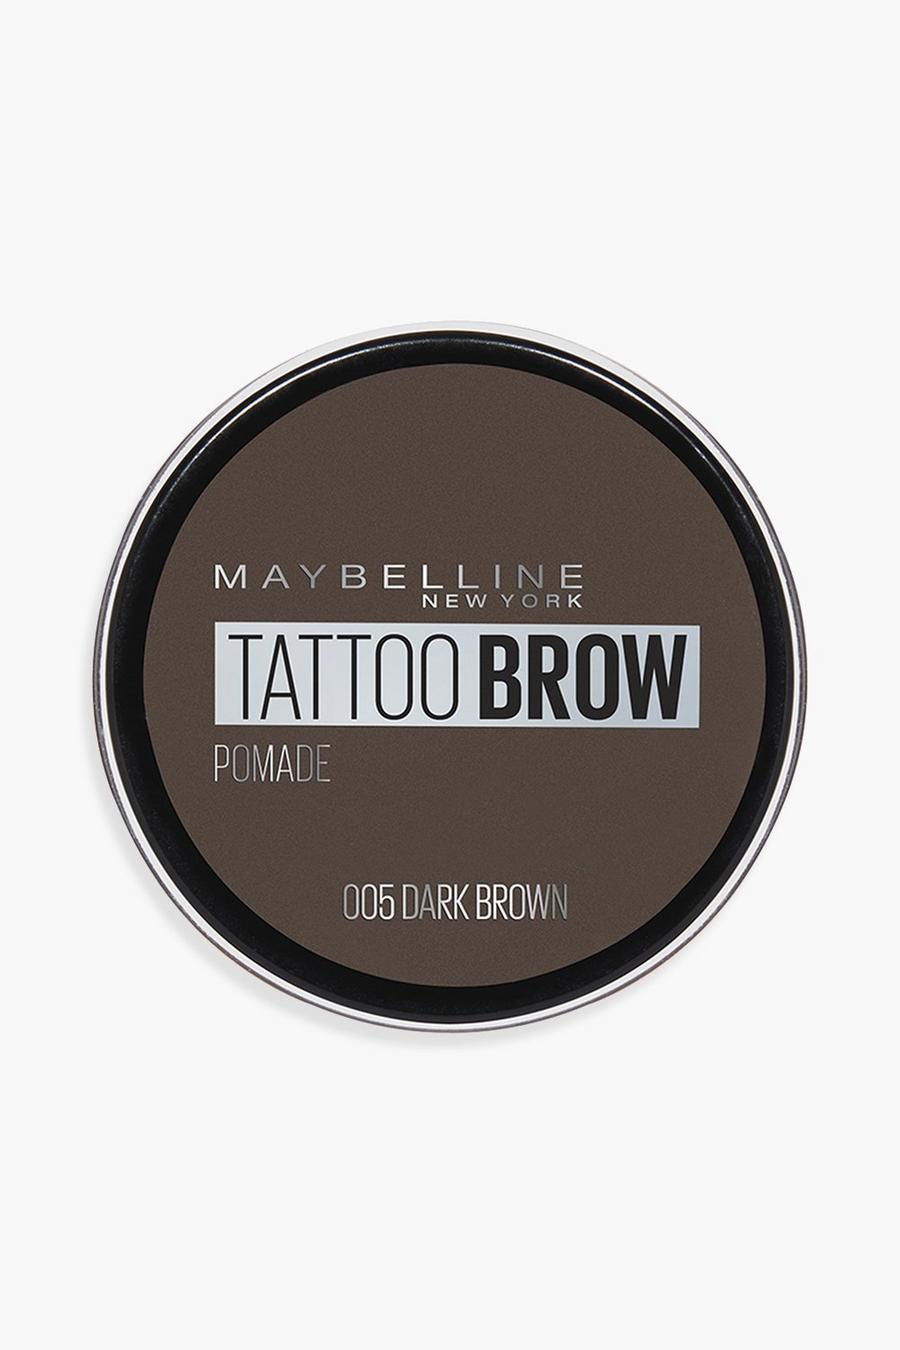 Crema tatuaje para cejas de Maybelline, 05 dark brown image number 1